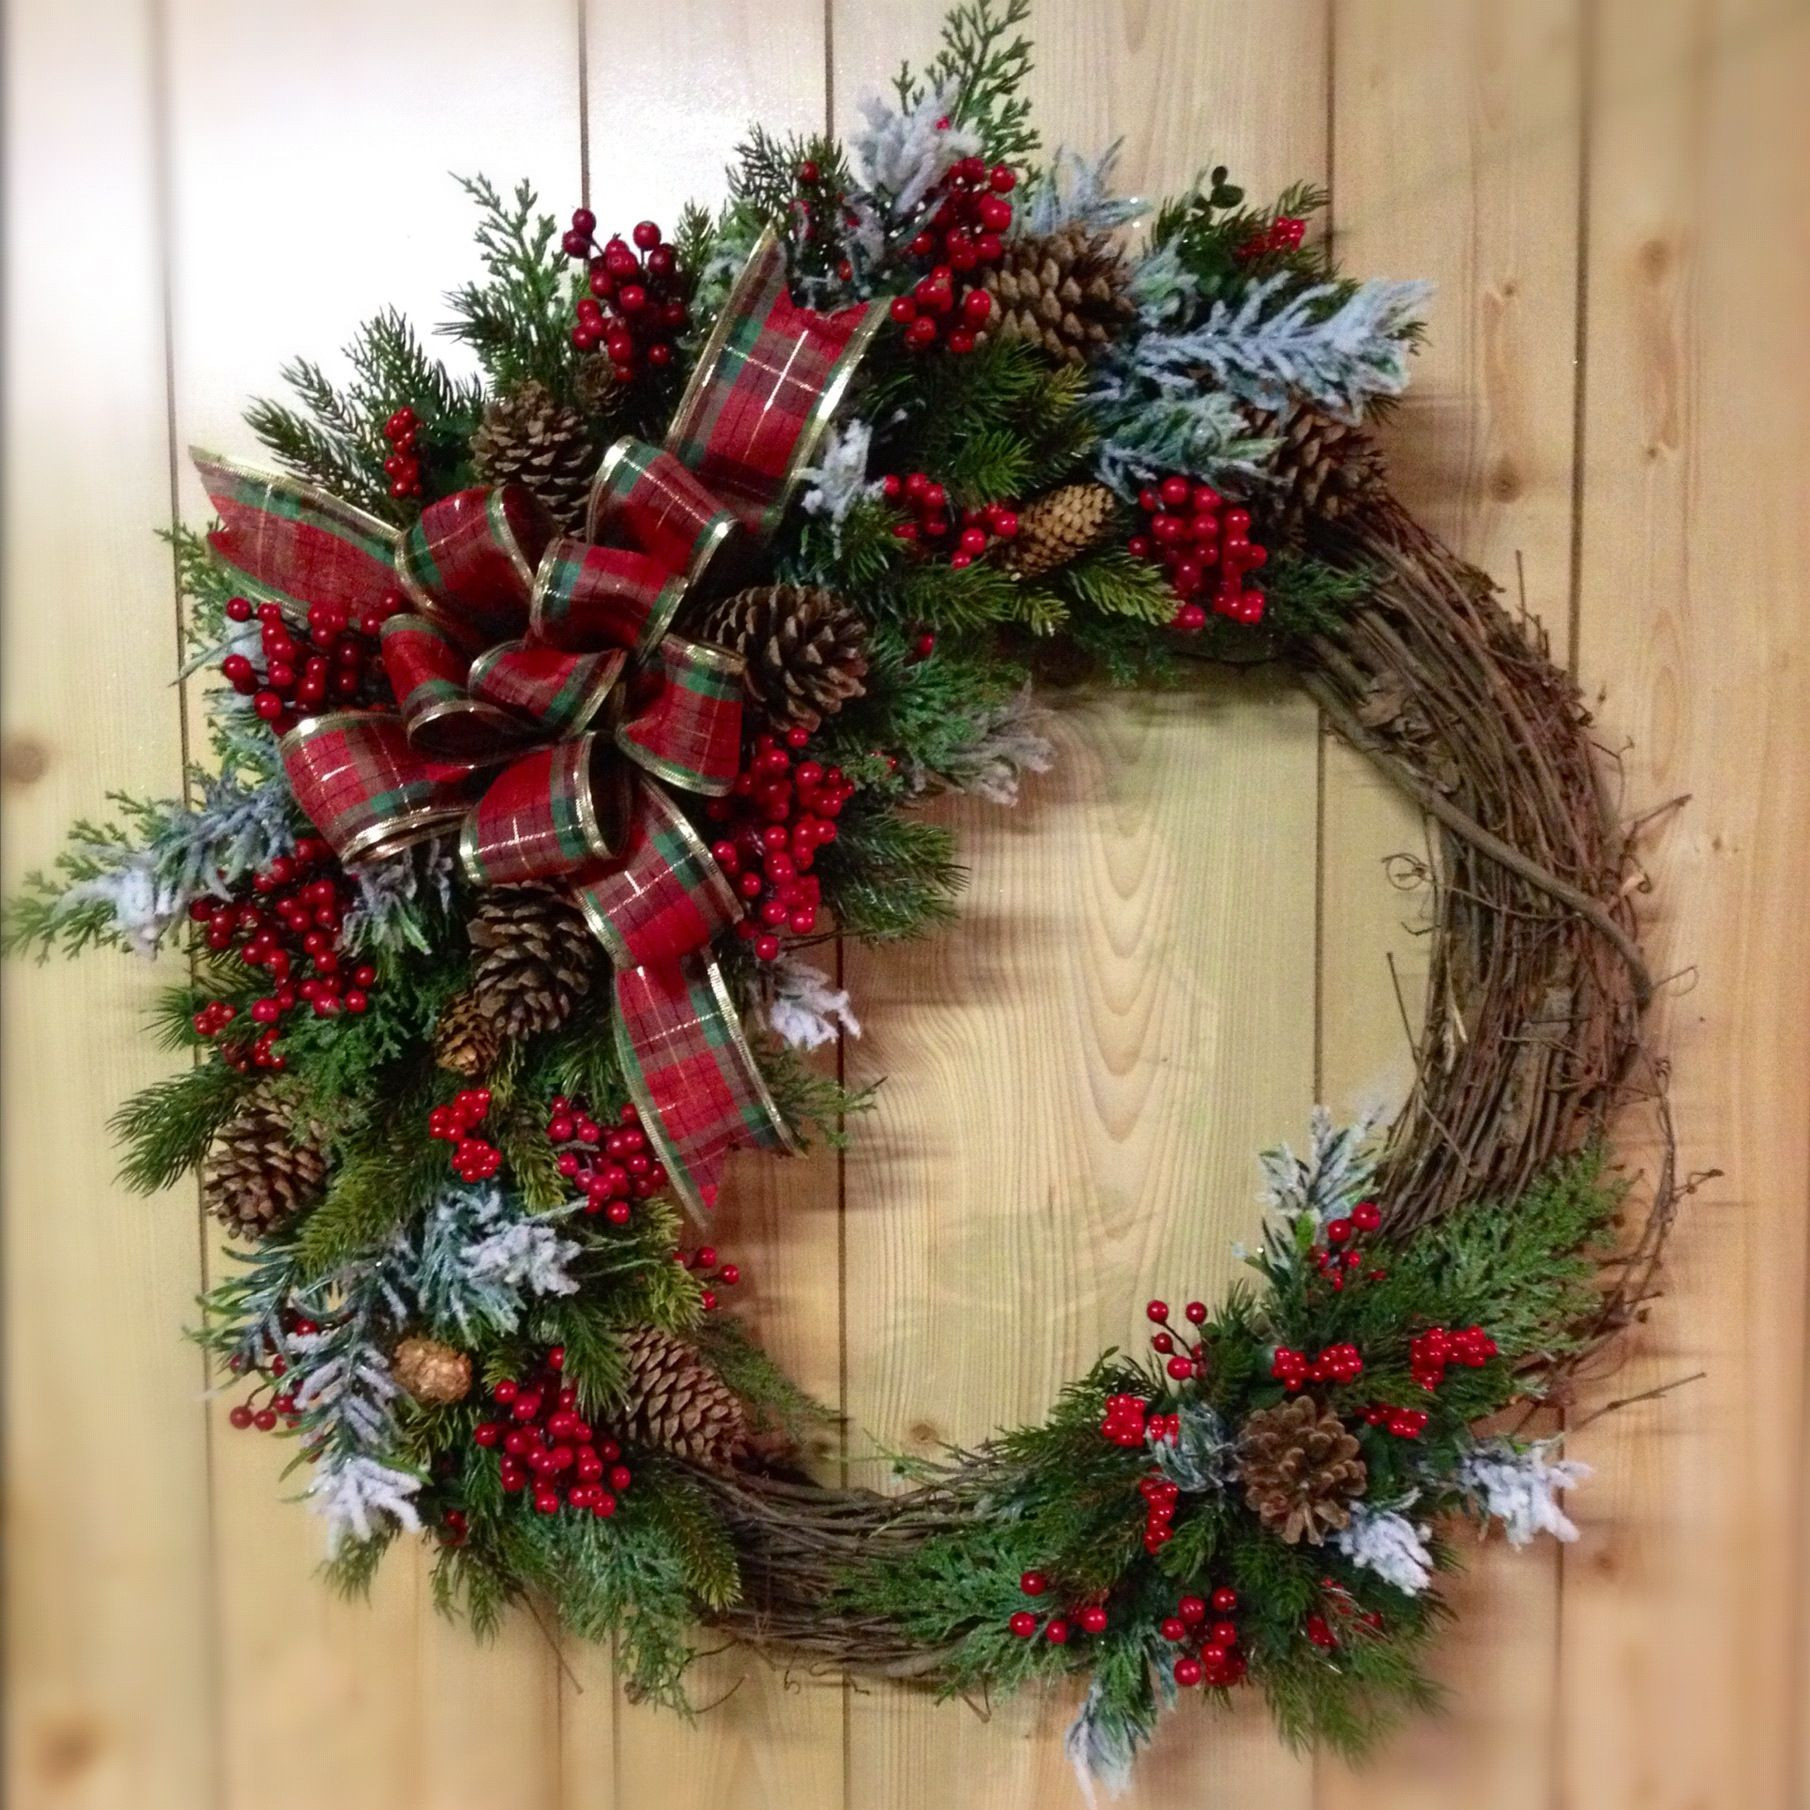 DIY Christmas Wreath Pinterest
 Rustic Christmas wreath Christmas